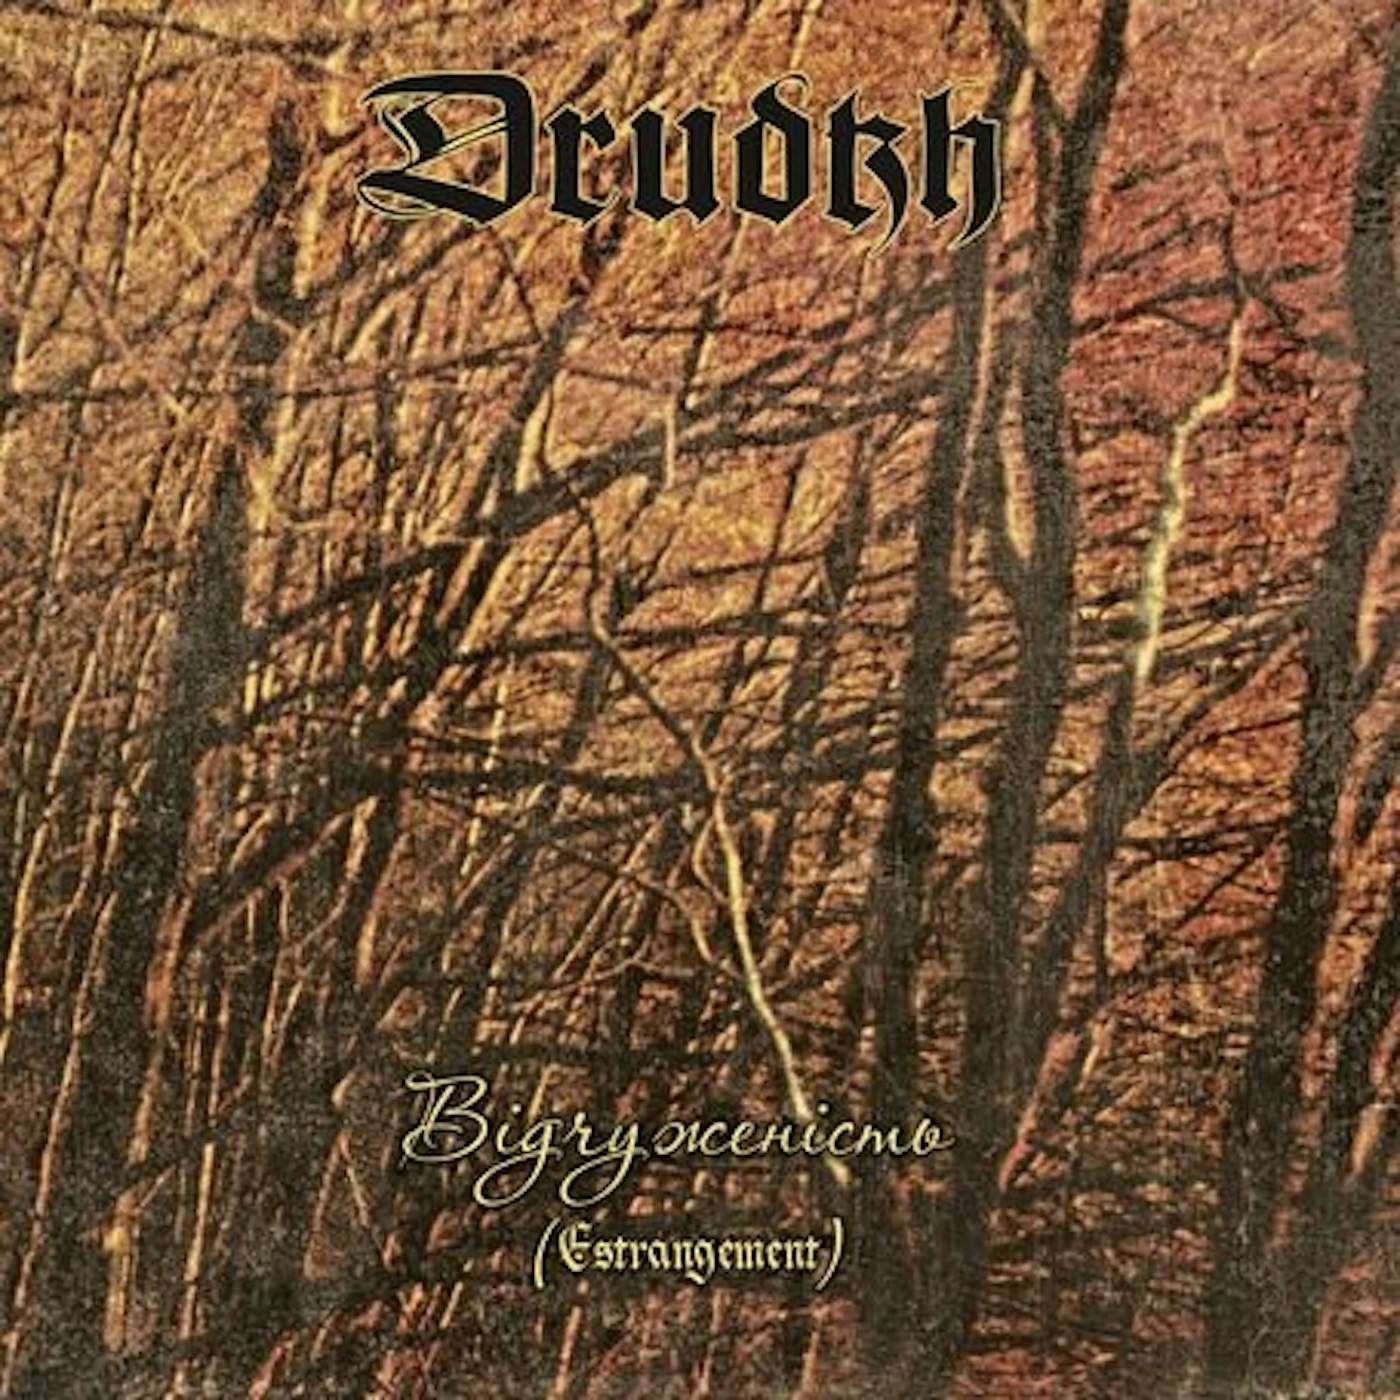 Drudkh Estrangement Vinyl Record